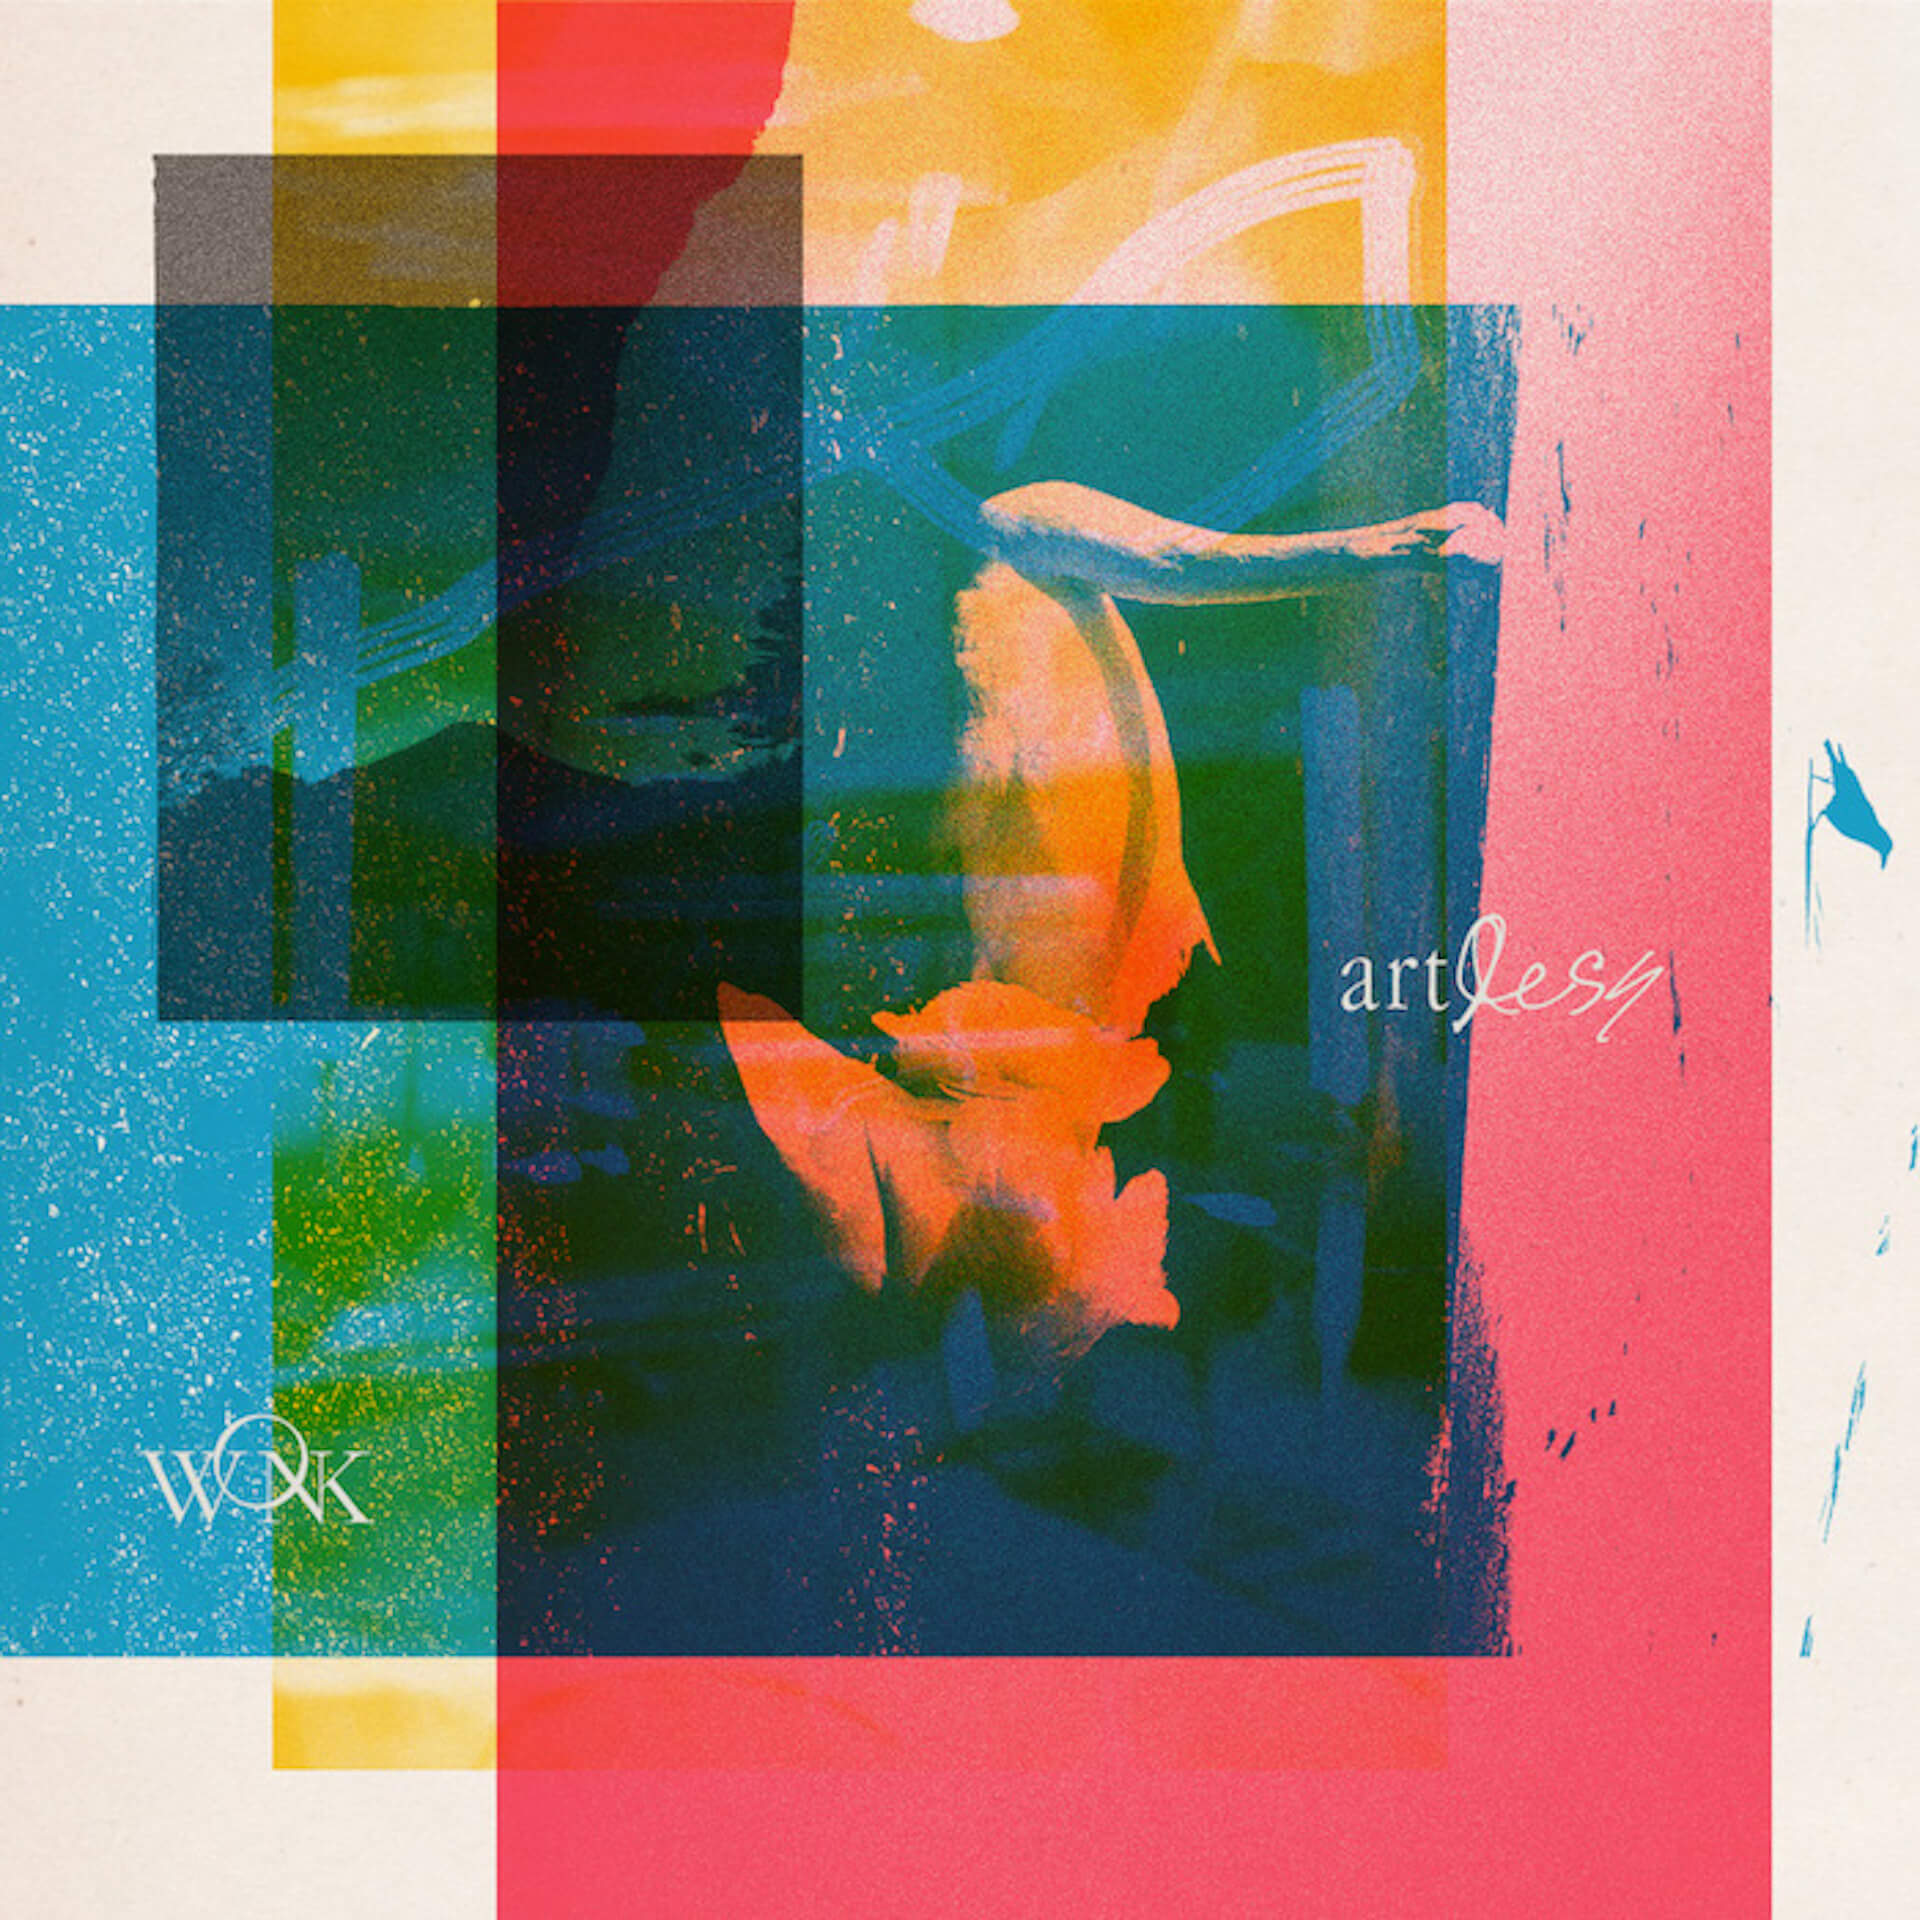 WONK、新アルバム『artless』をドルビーアトモス仕様でリリース｜ メンバーが語るオーディオライナーノーツも公開 music220511_wonk-01